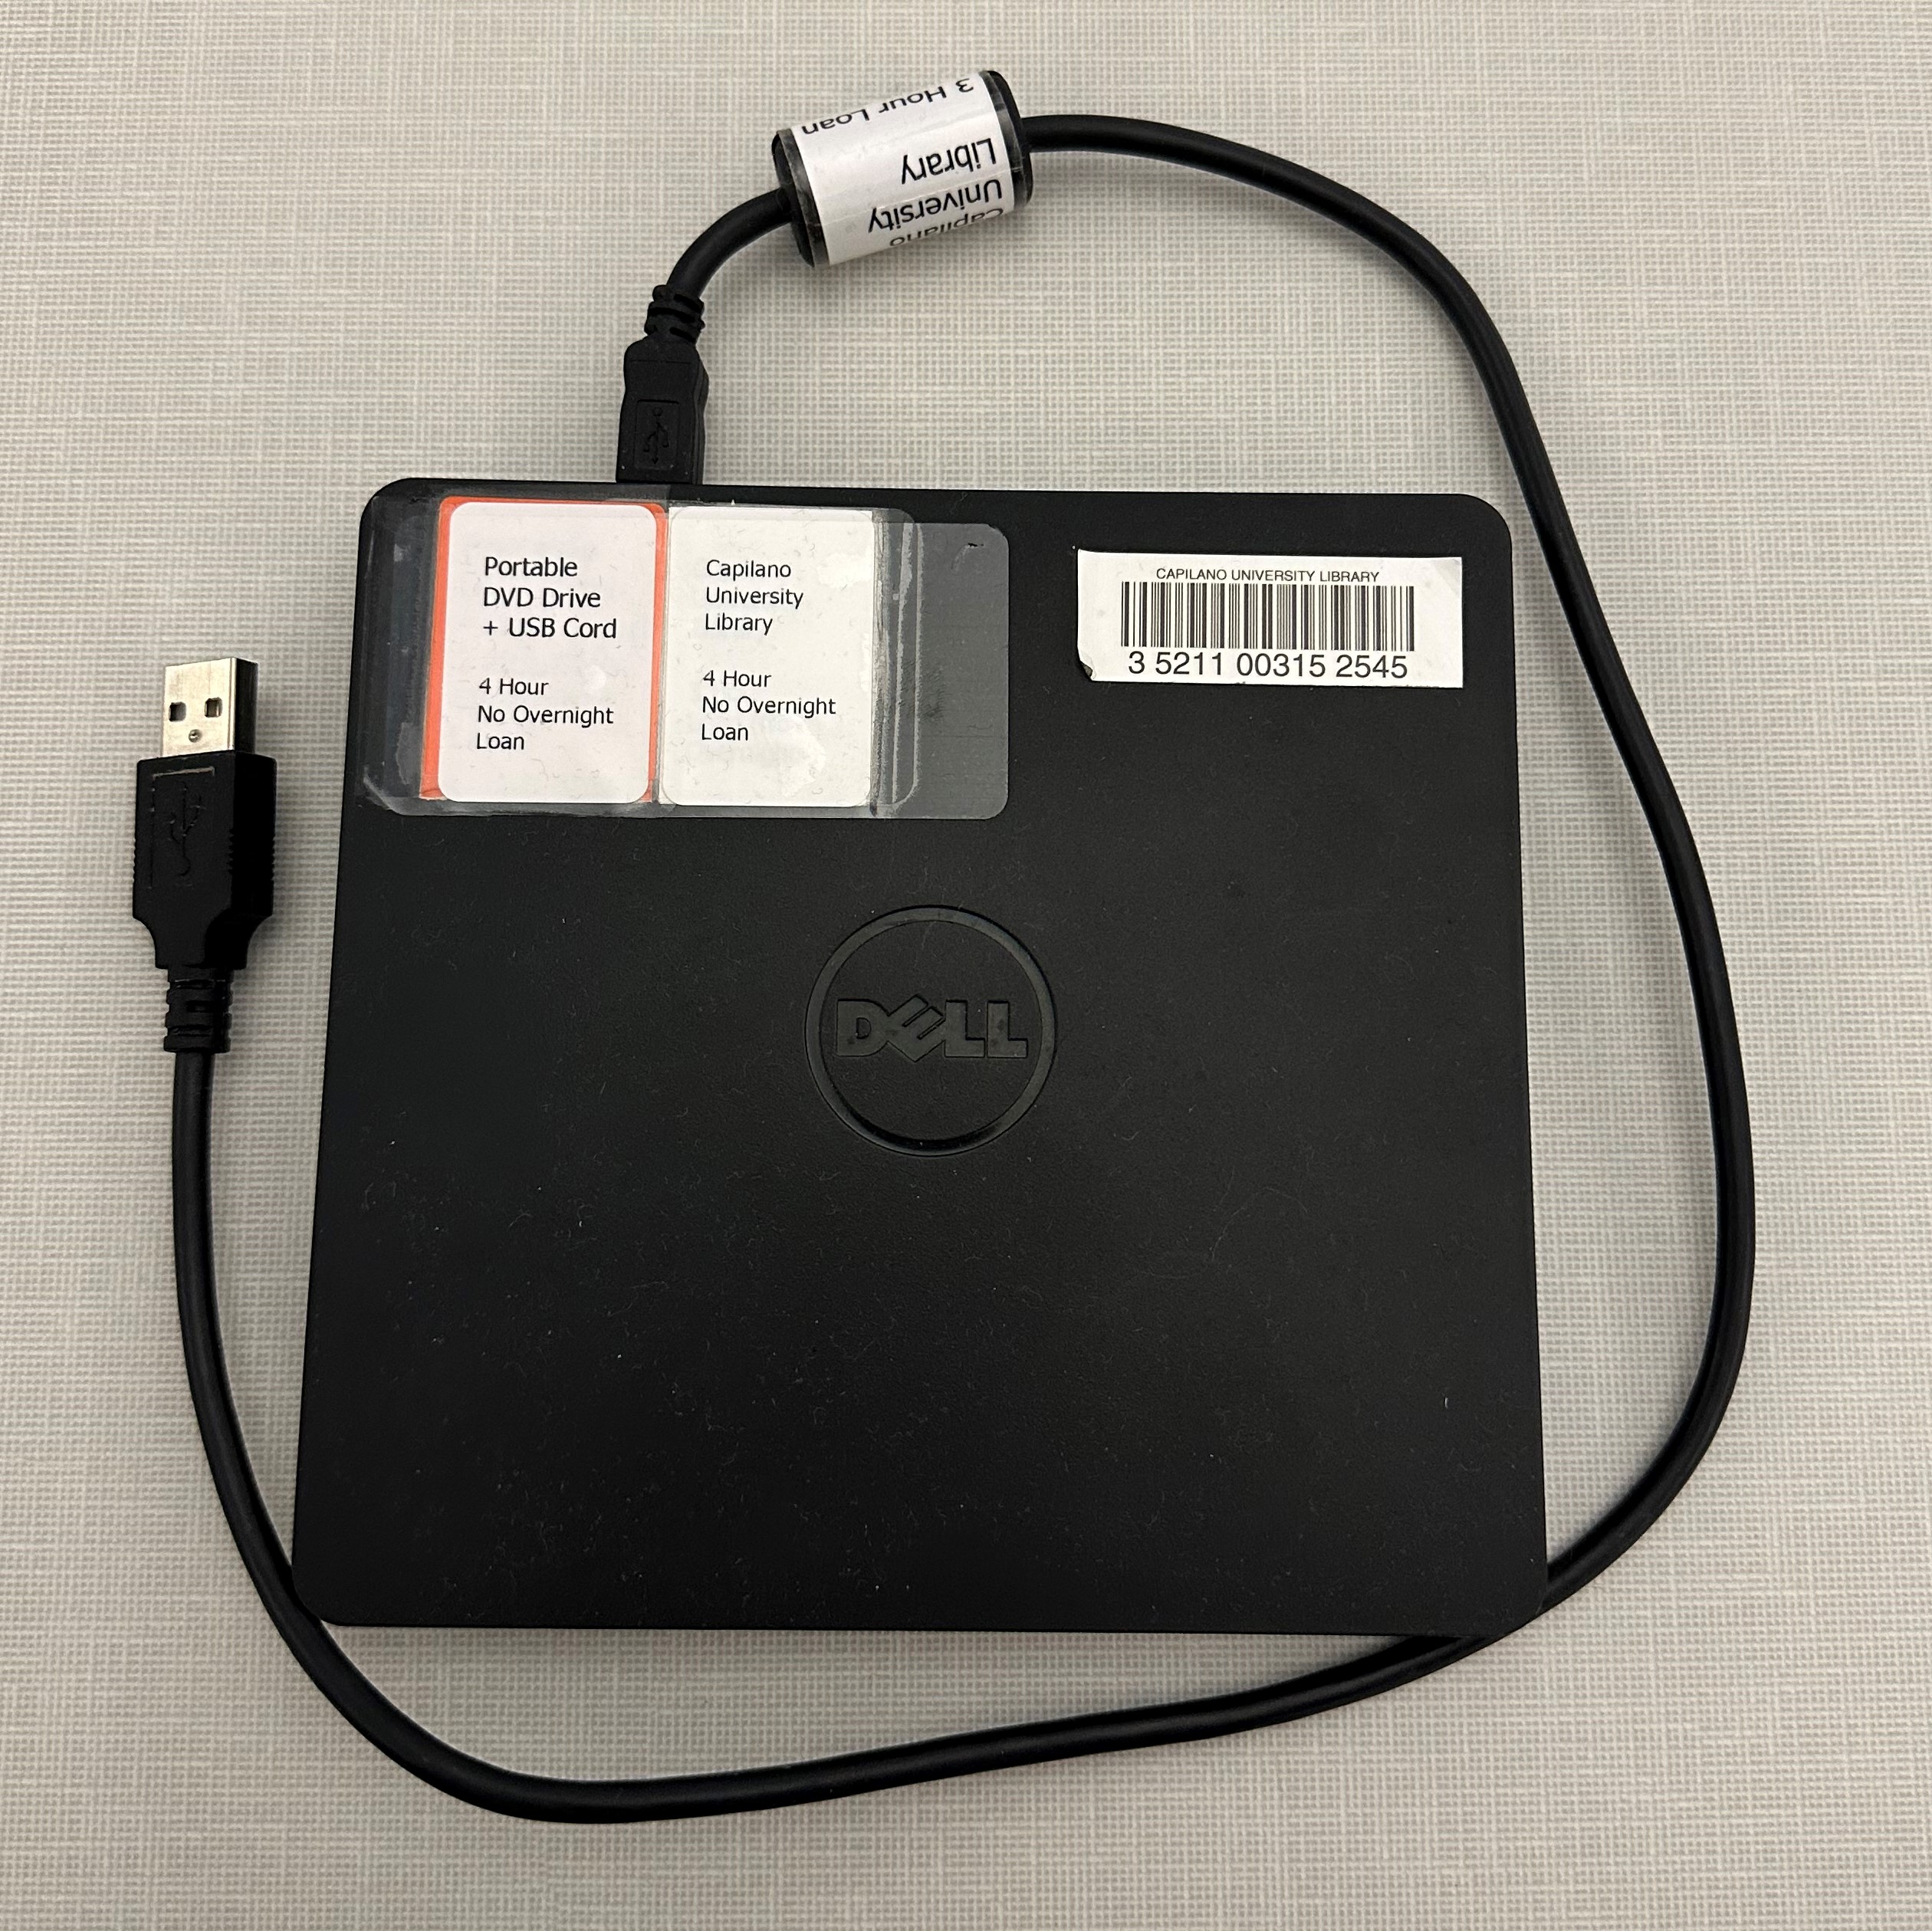 Dell USB DVD player